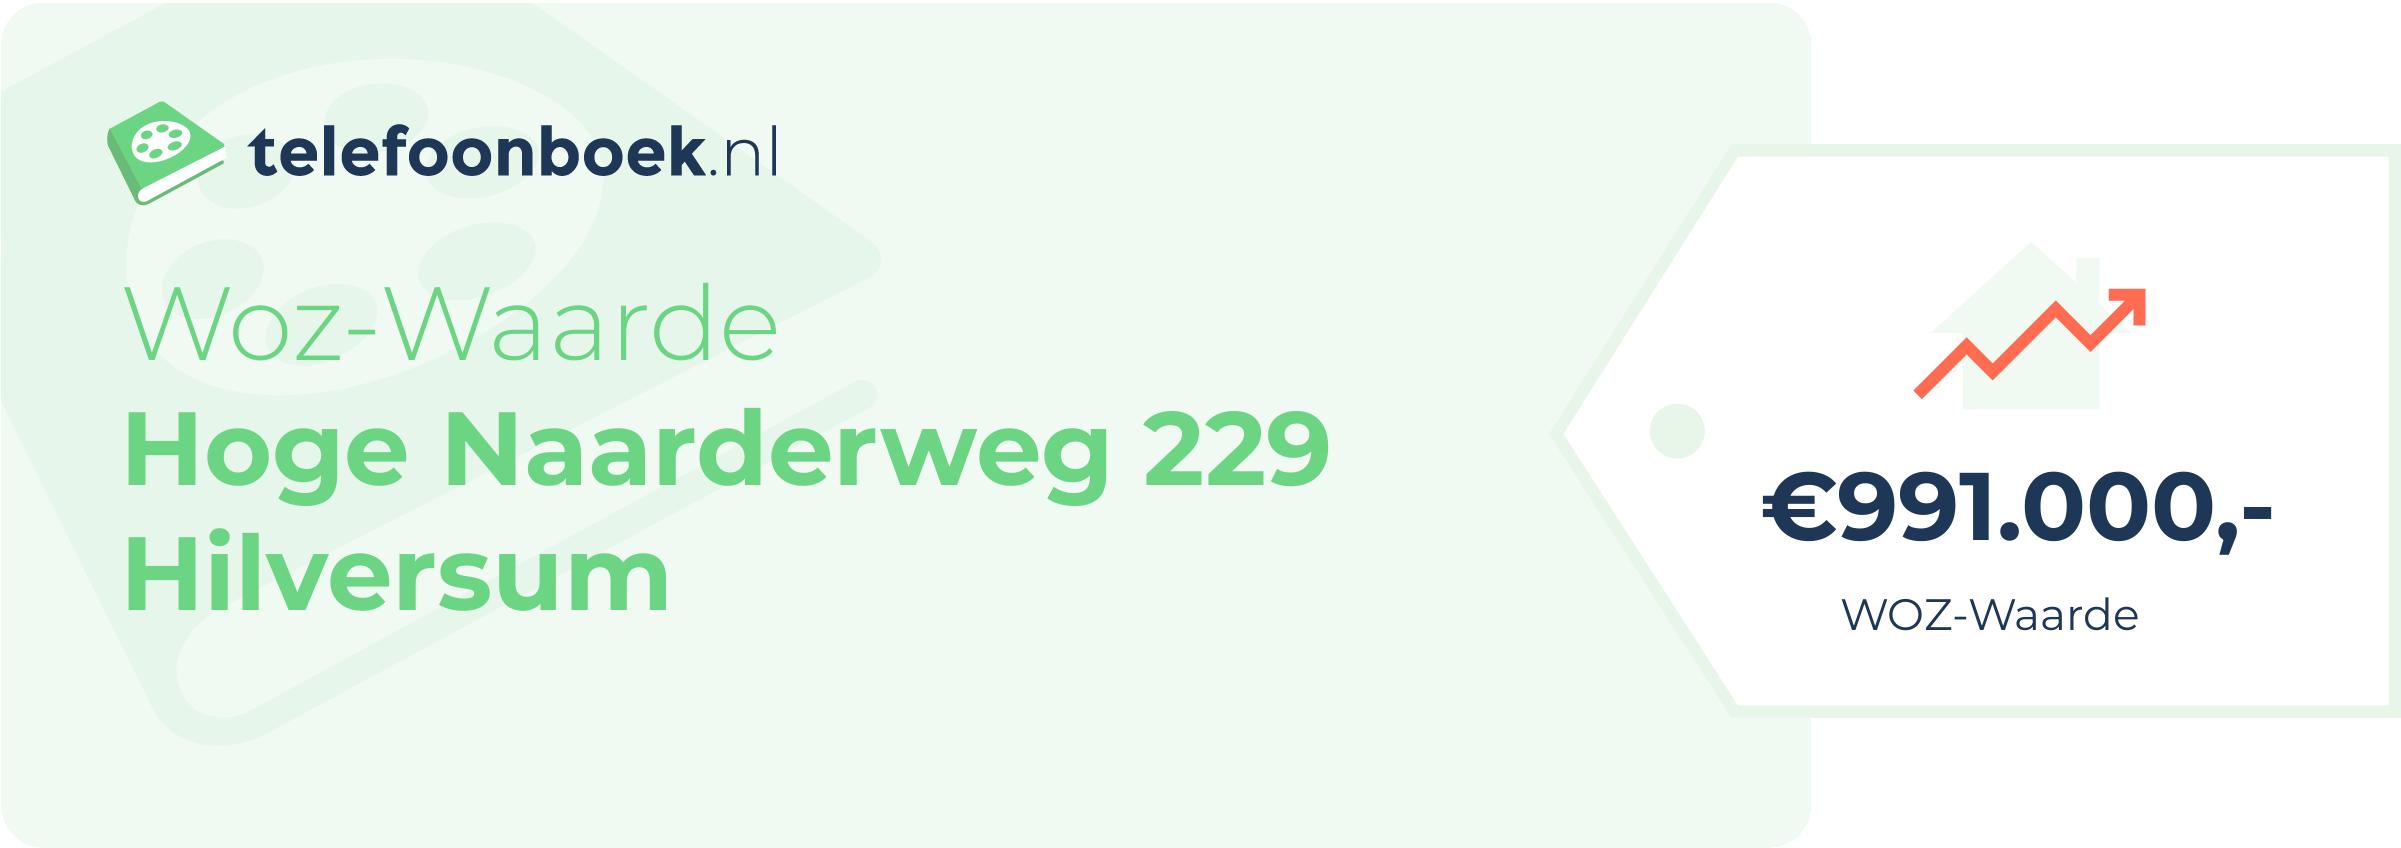 WOZ-waarde Hoge Naarderweg 229 Hilversum